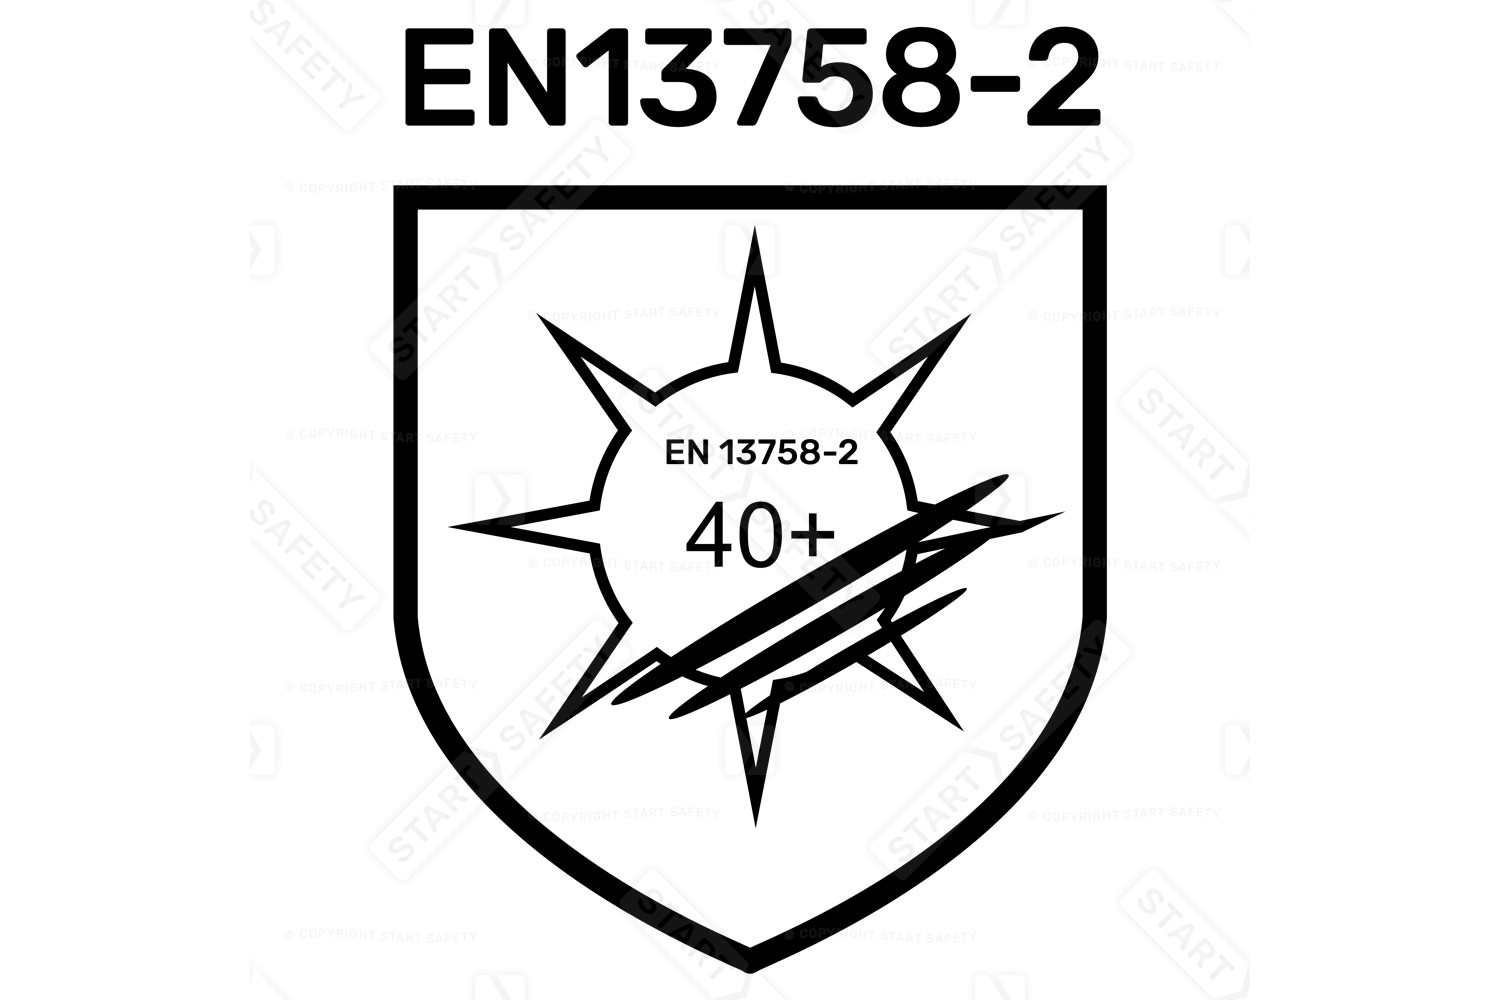 EN 13758-2 40+ UV Protection Workwear Standard Symbol